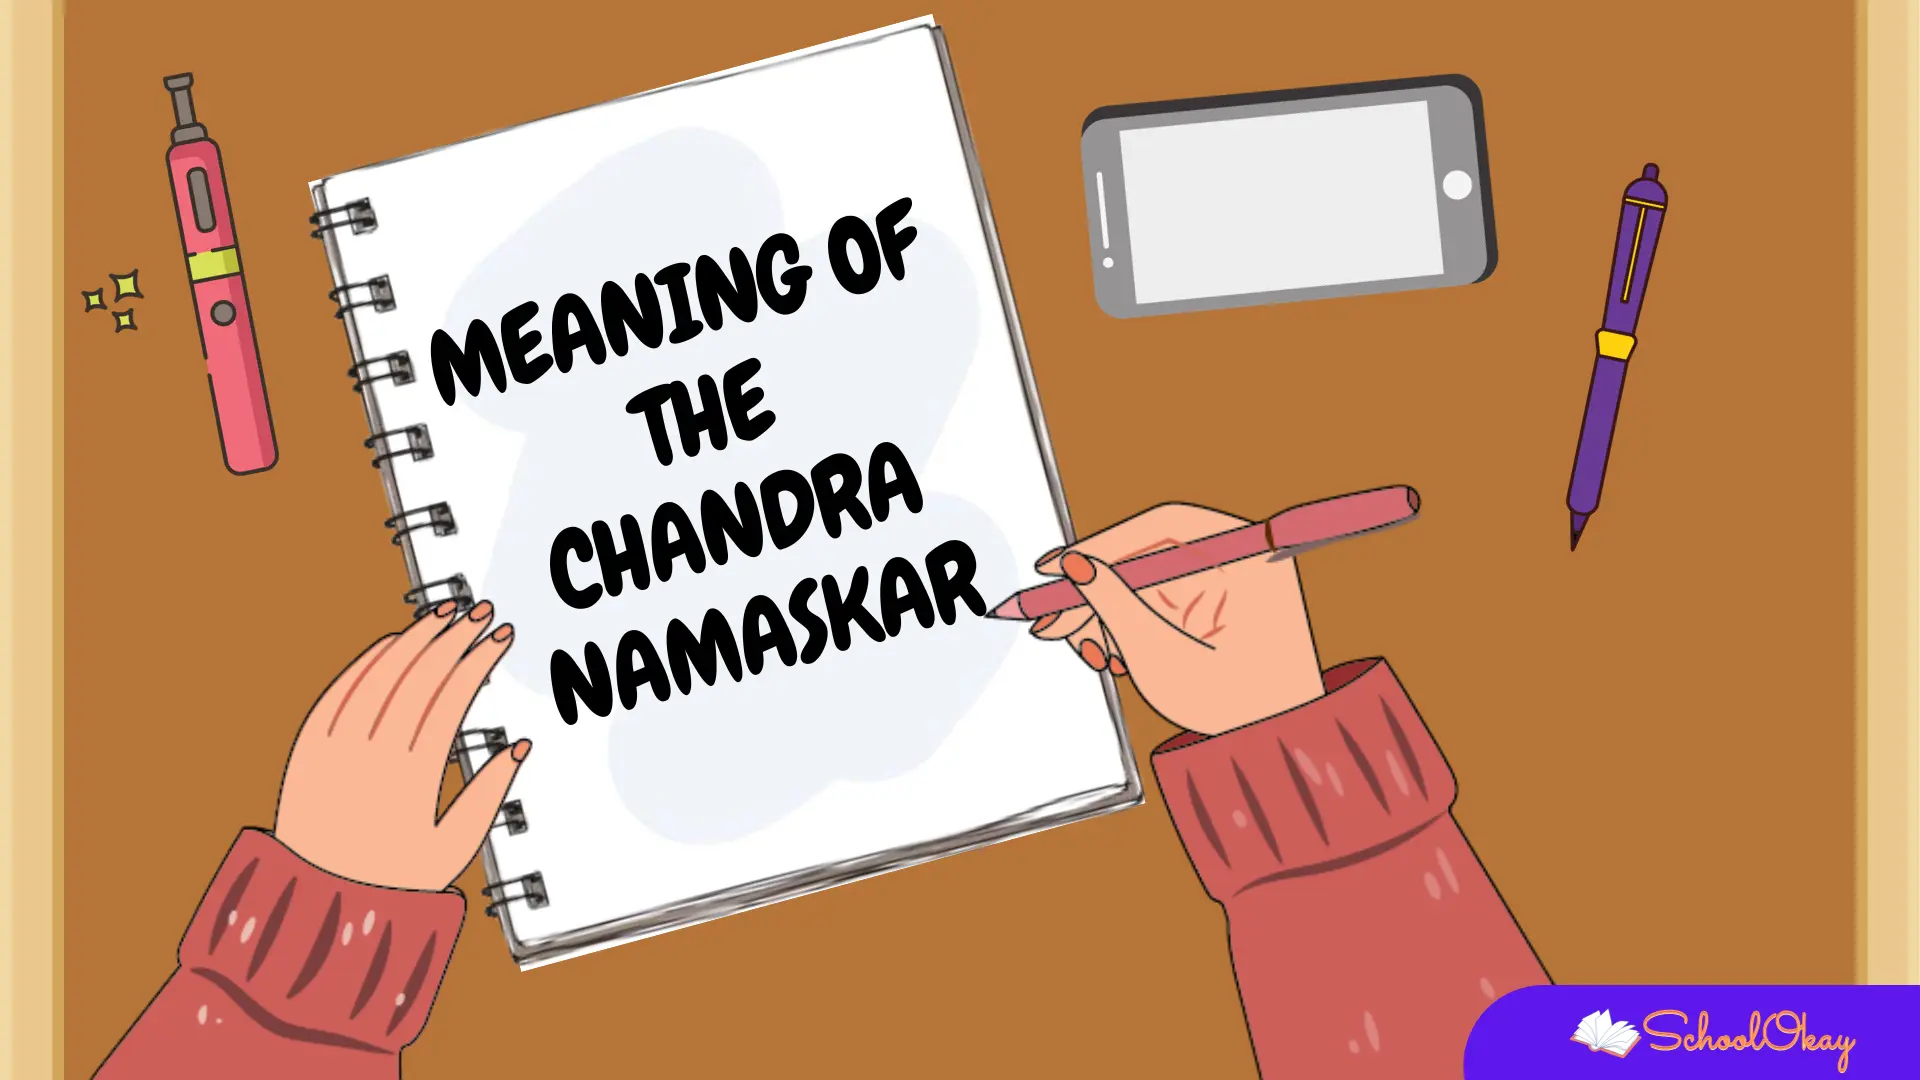 Chandra Namaskar